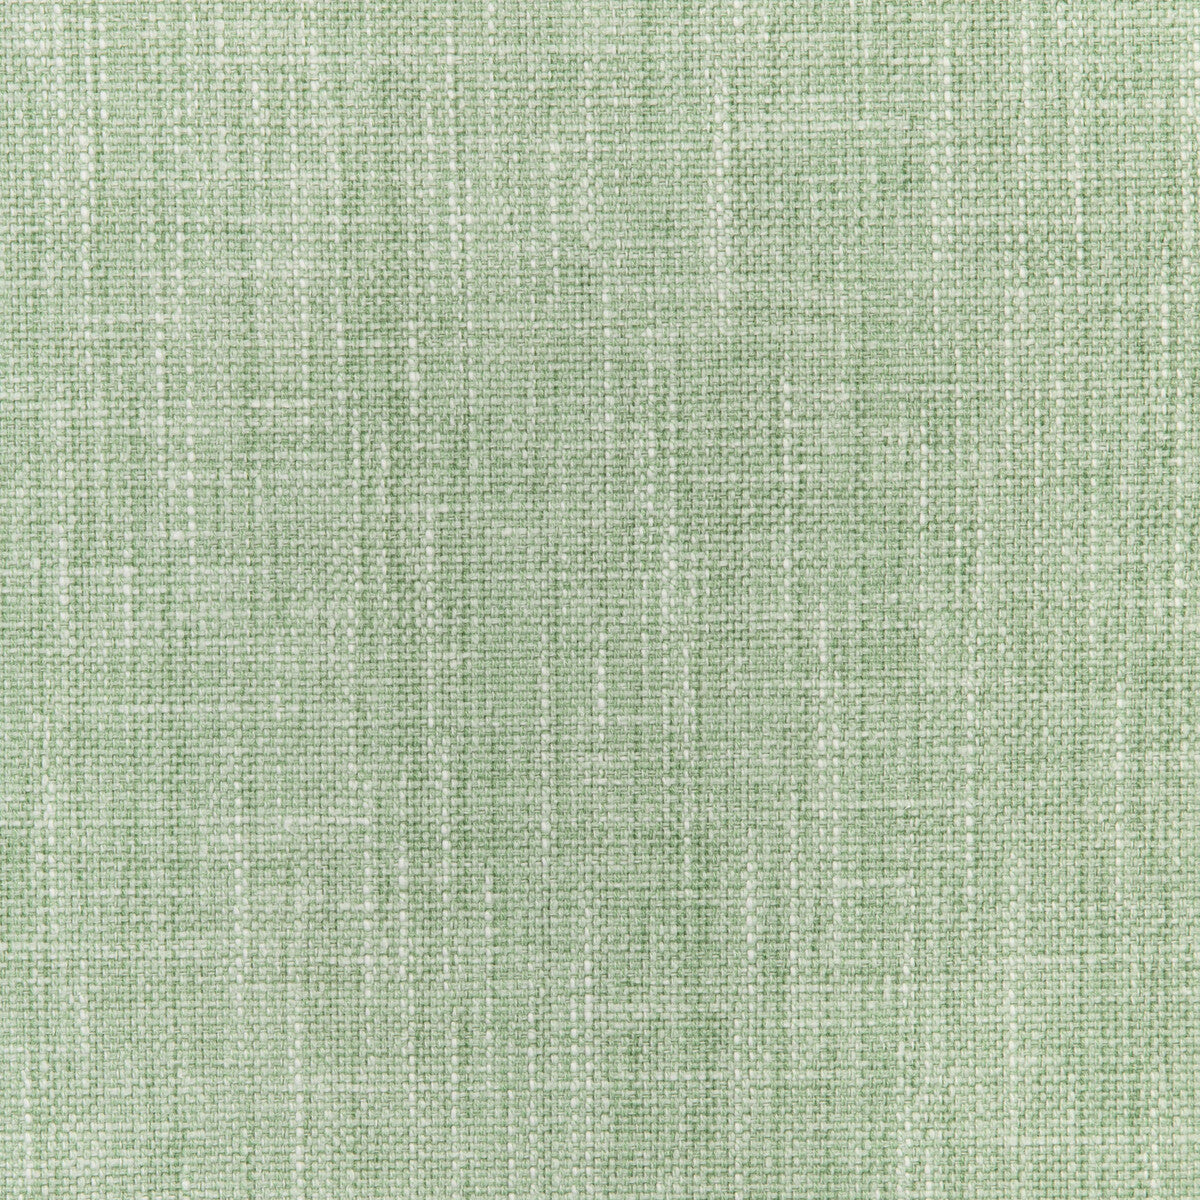 Kravet Smart fabric in 37065-123 color - pattern 37065.123.0 - by Kravet Smart